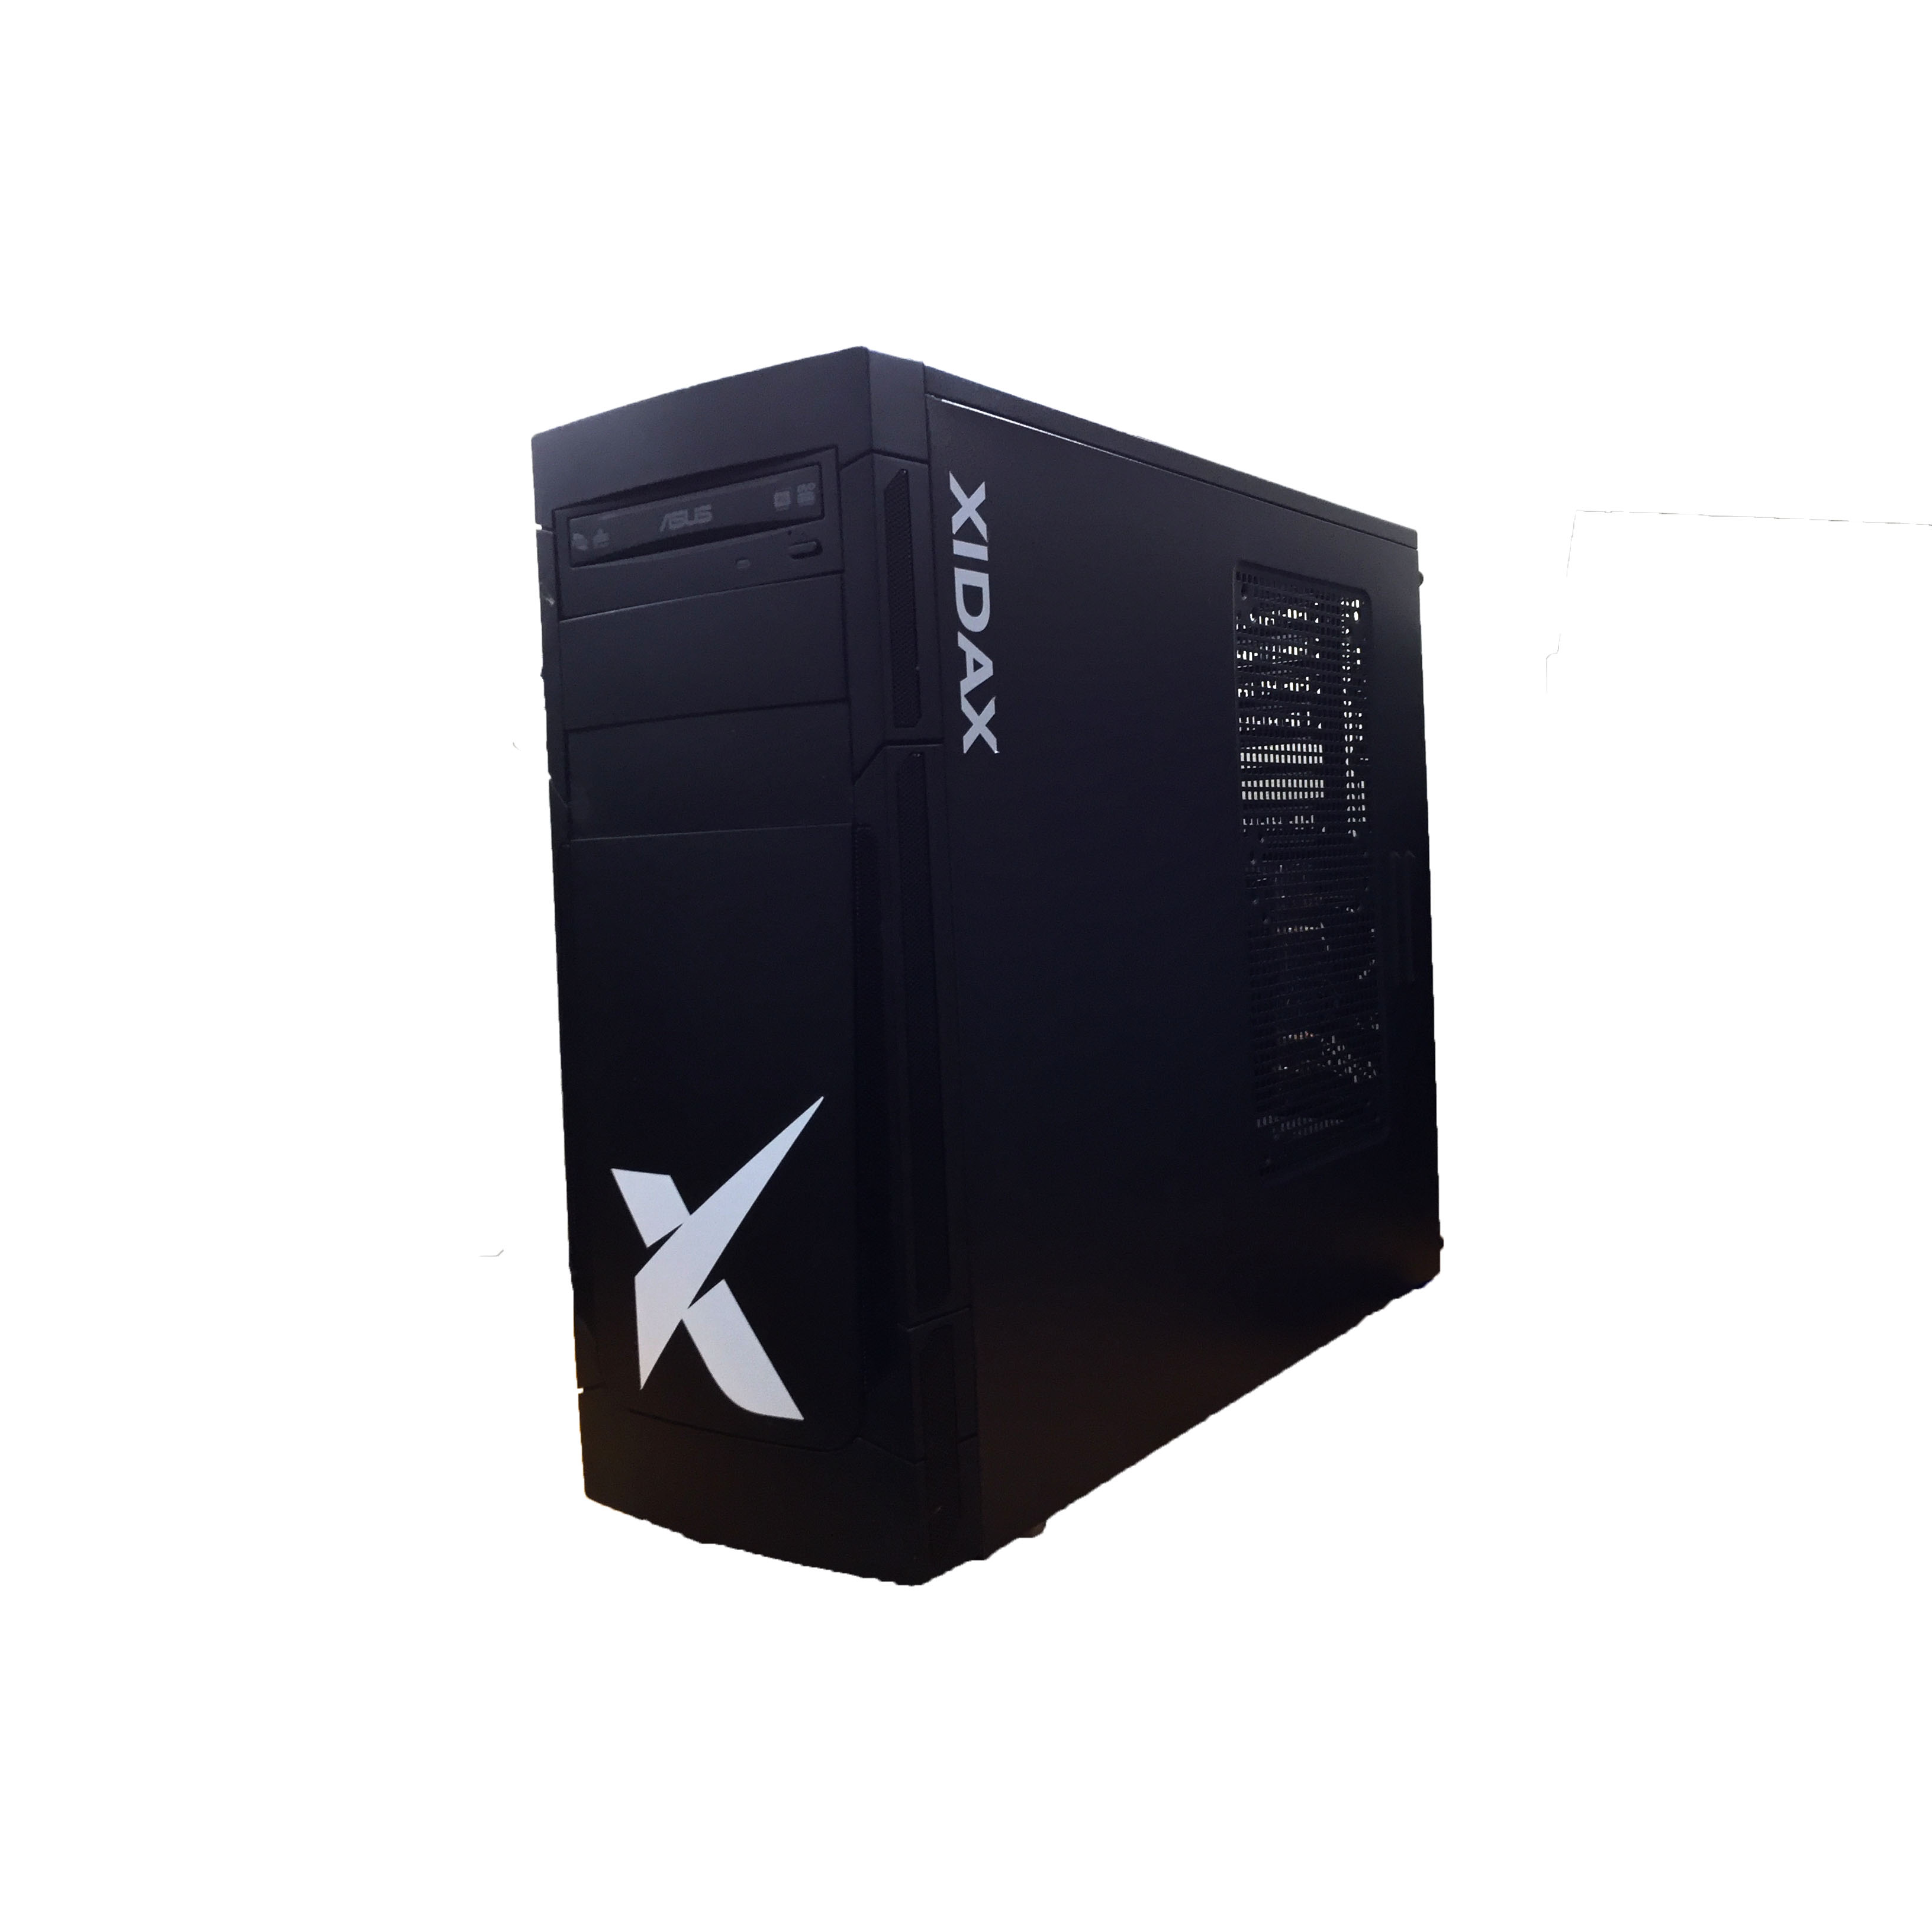 COMPUTER ASUS XIDAX  INTEL CORE i7 7700 3.6 GHz , 16G, SSD 512GB+SSD 128 GB+VGA INTEL HD 630  مستعمل, Used PC